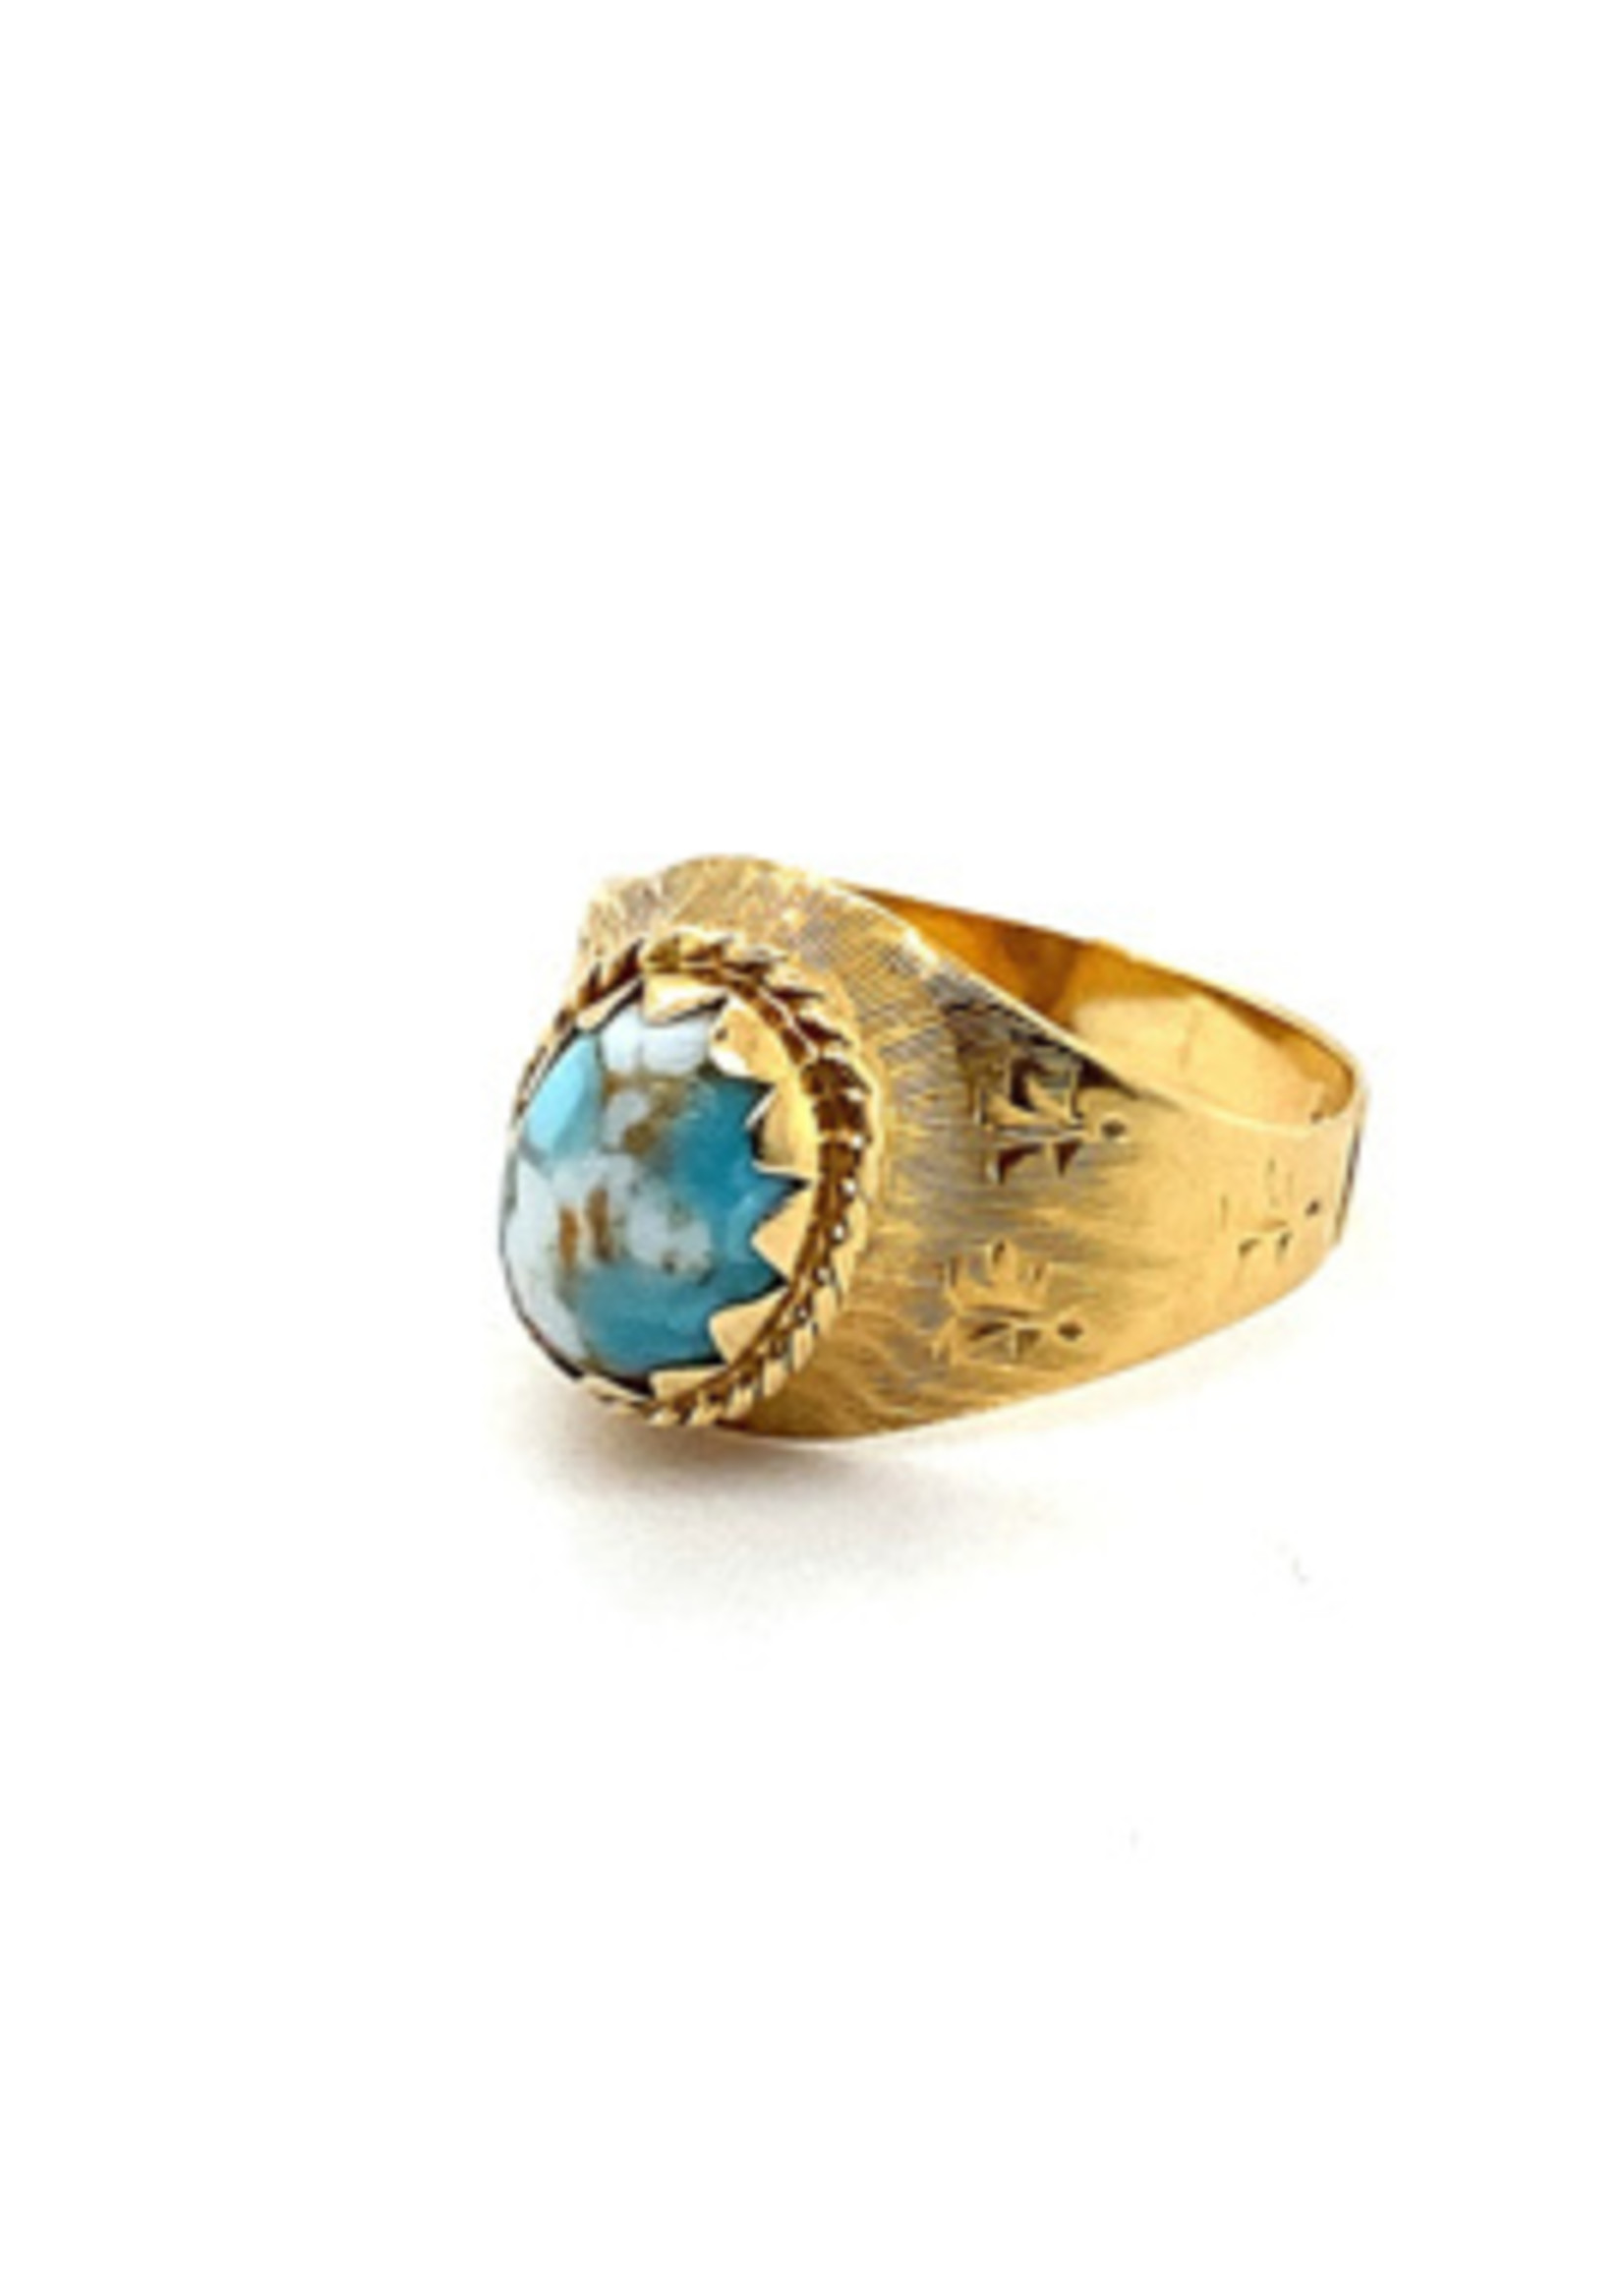 Vintage & Occasion Occasion gouden toelopende ring met turkoois gesteente